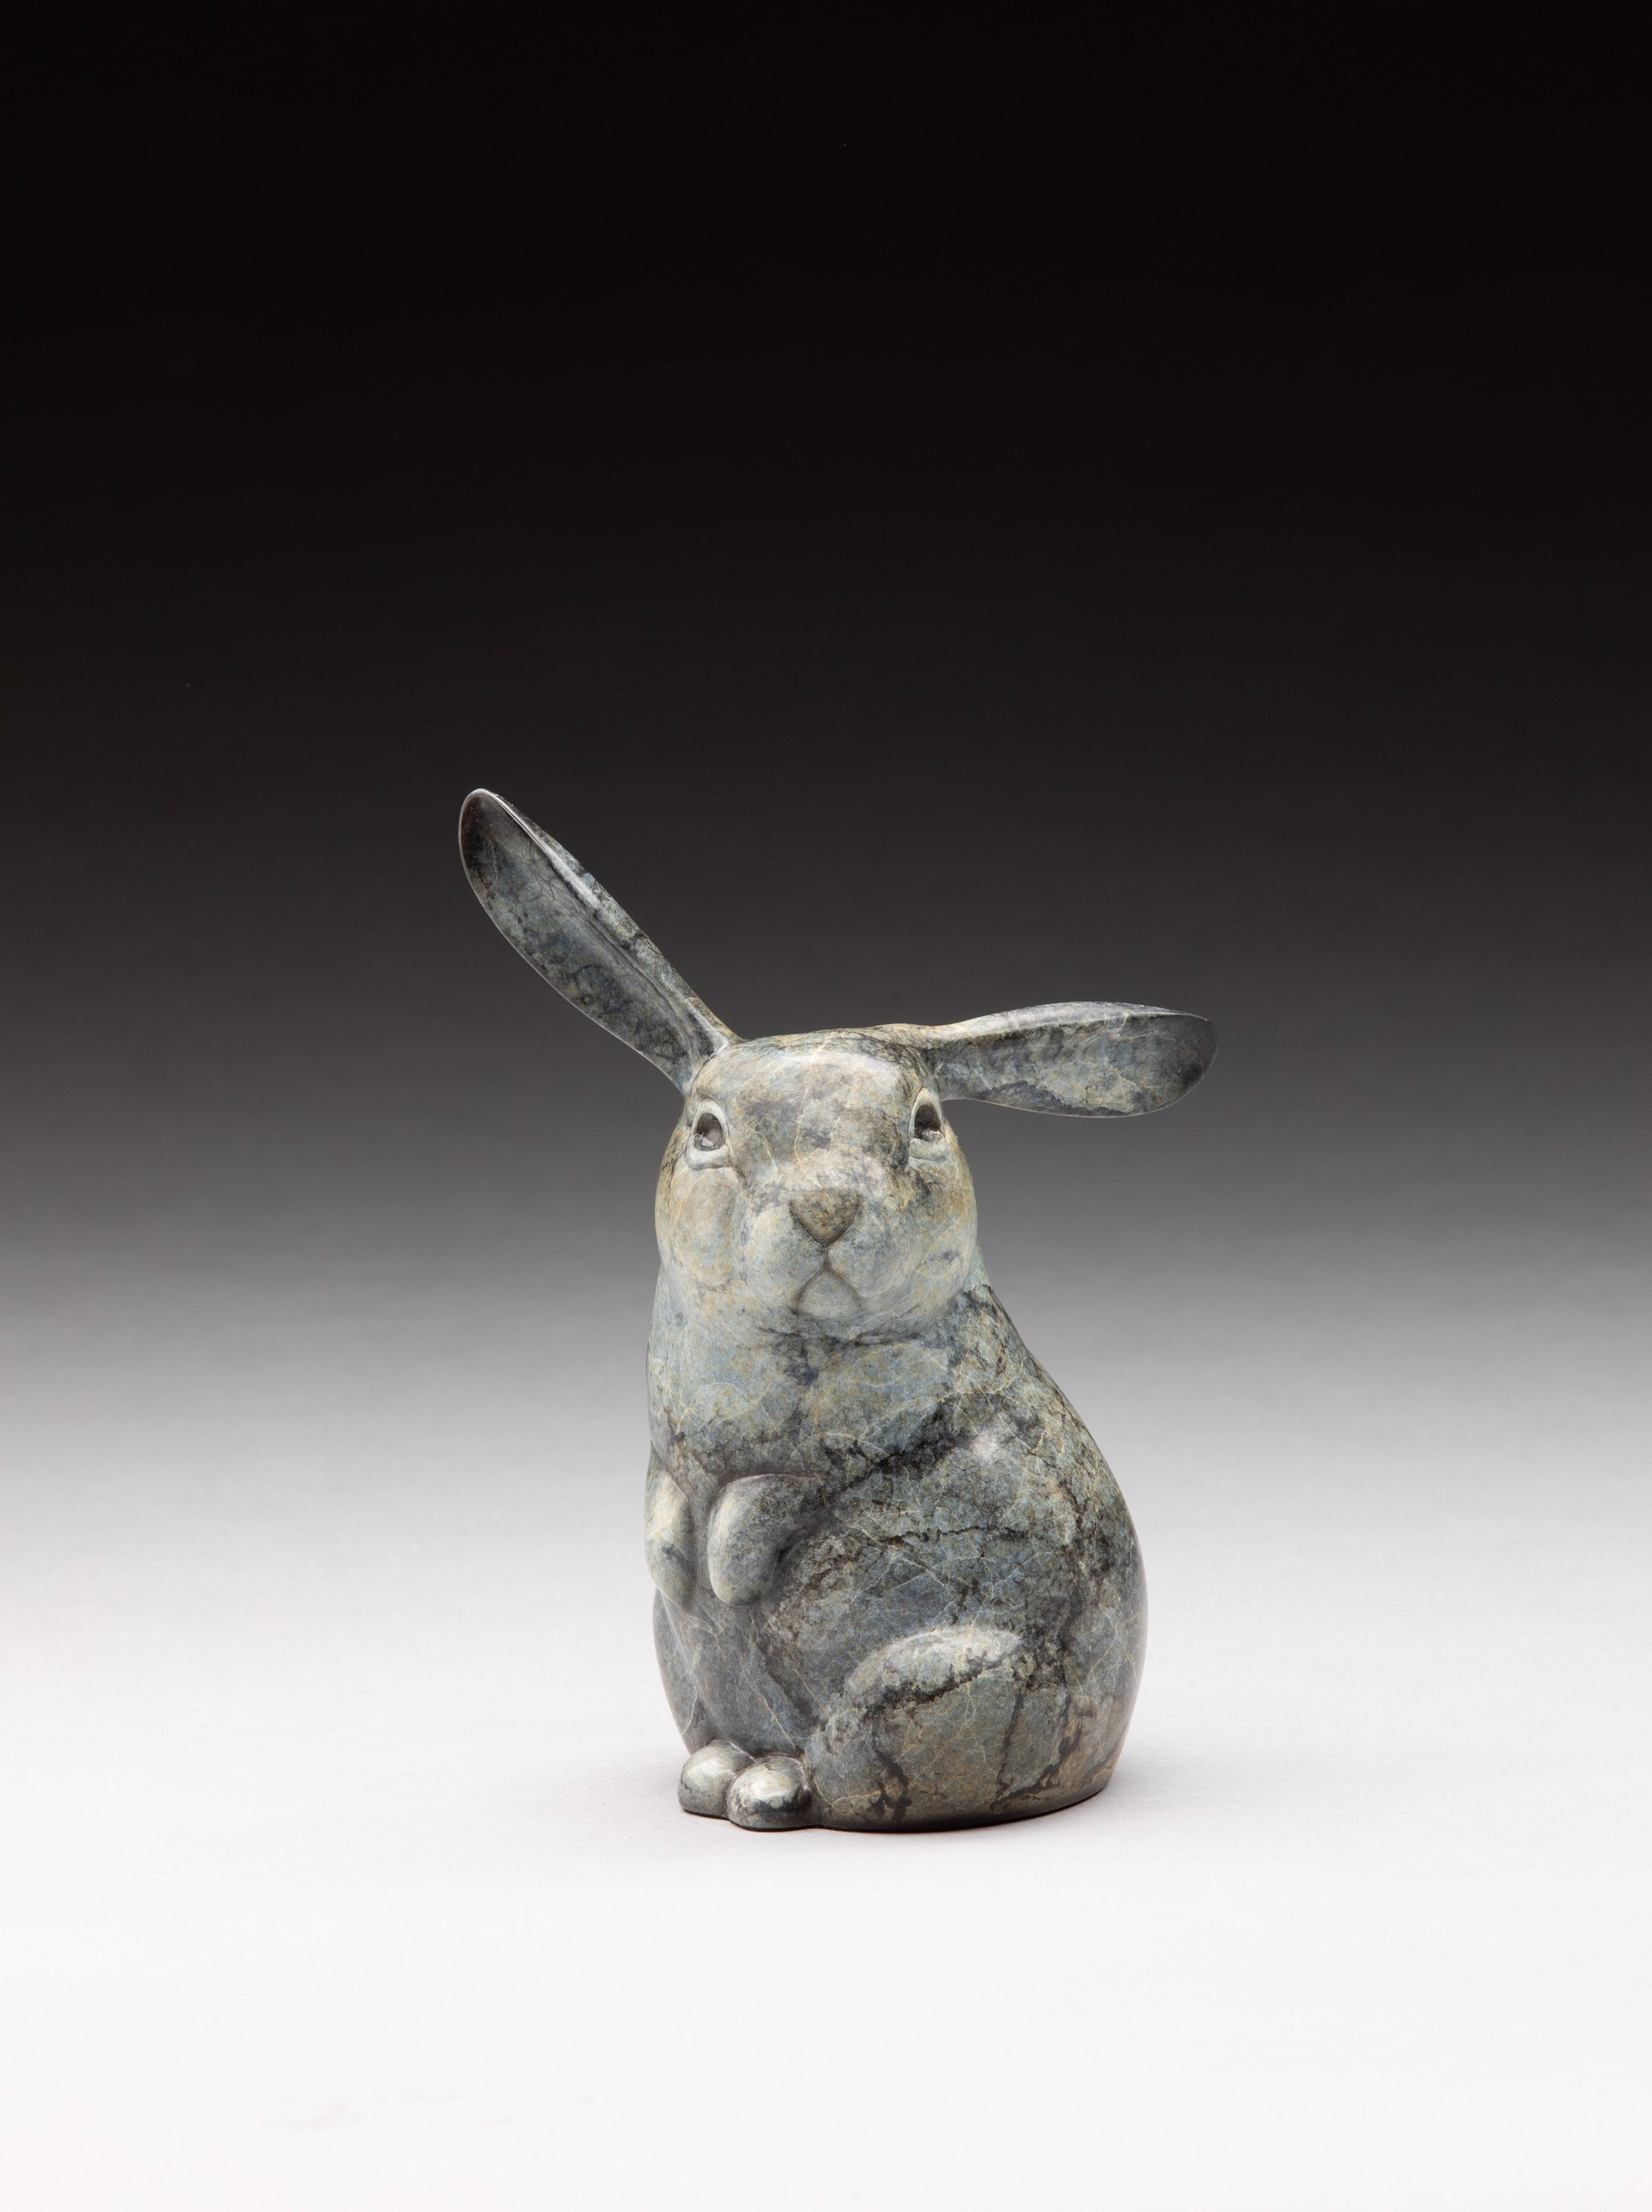 Bunny - Echo by Joshua Tobey